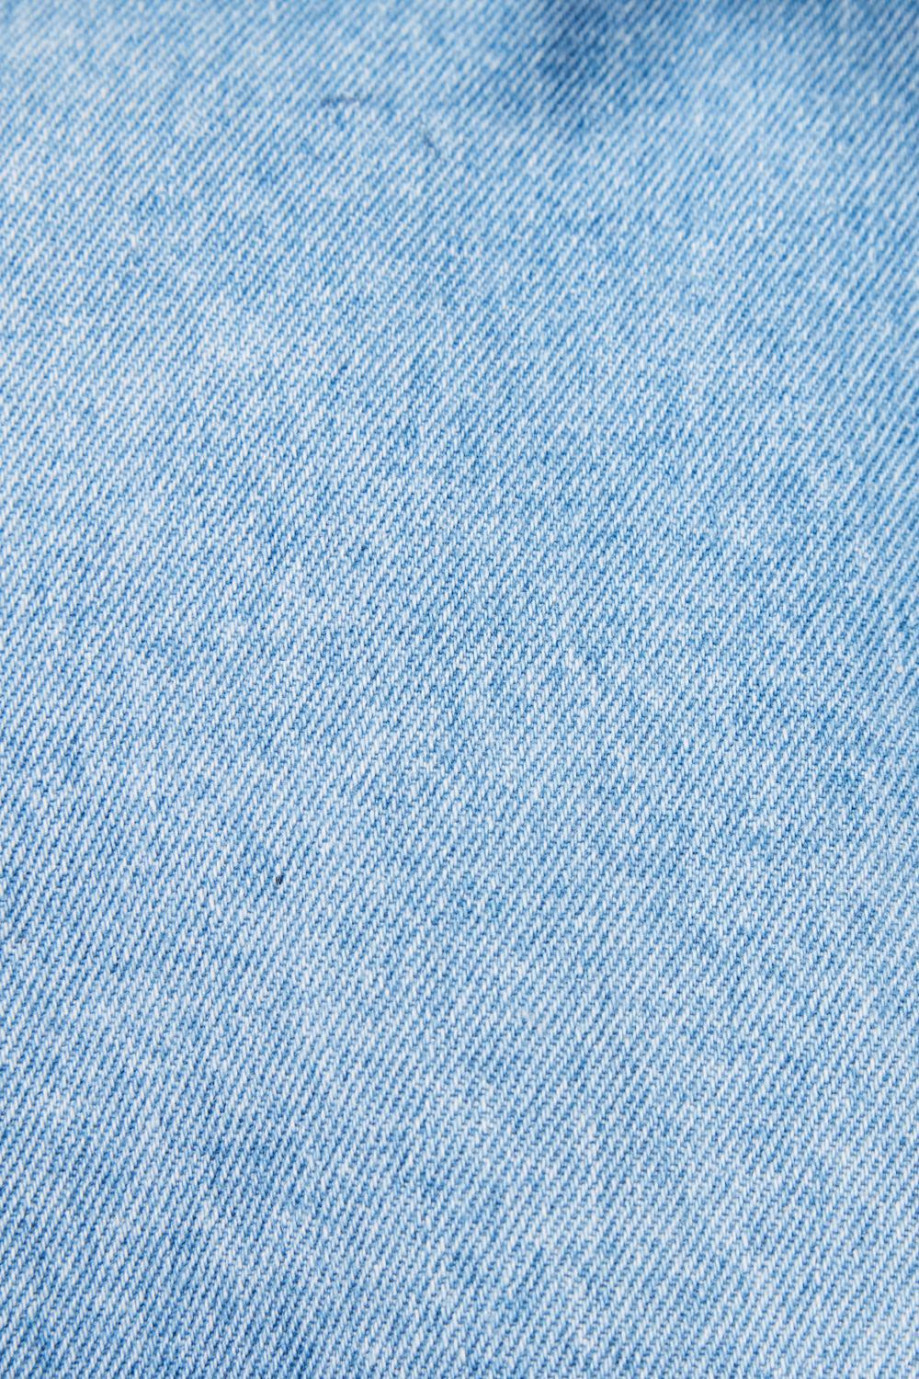 Sobrecamisa oversize azul clara en jean con bolsillos de parche